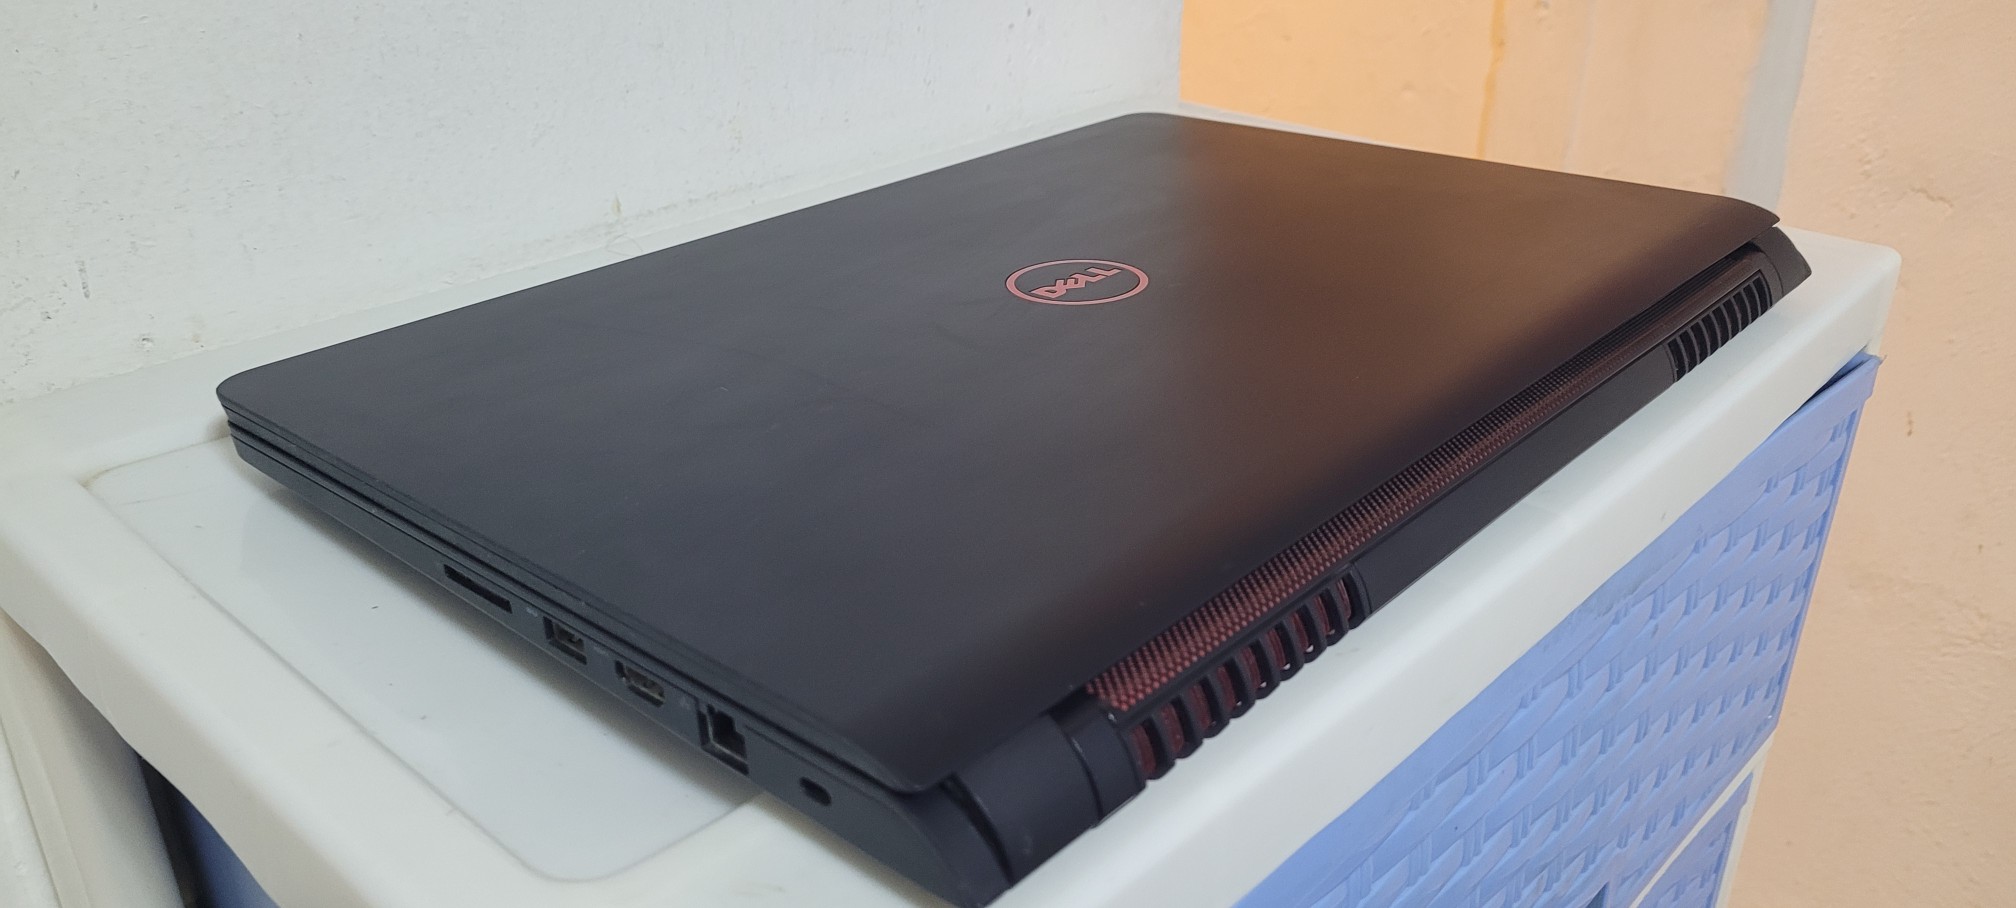 computadoras y laptops - Dell Gaming 17 Pulg Core i7 Ram 16gb SSD 512GB Gtx 960m 4gb Dedicada 2